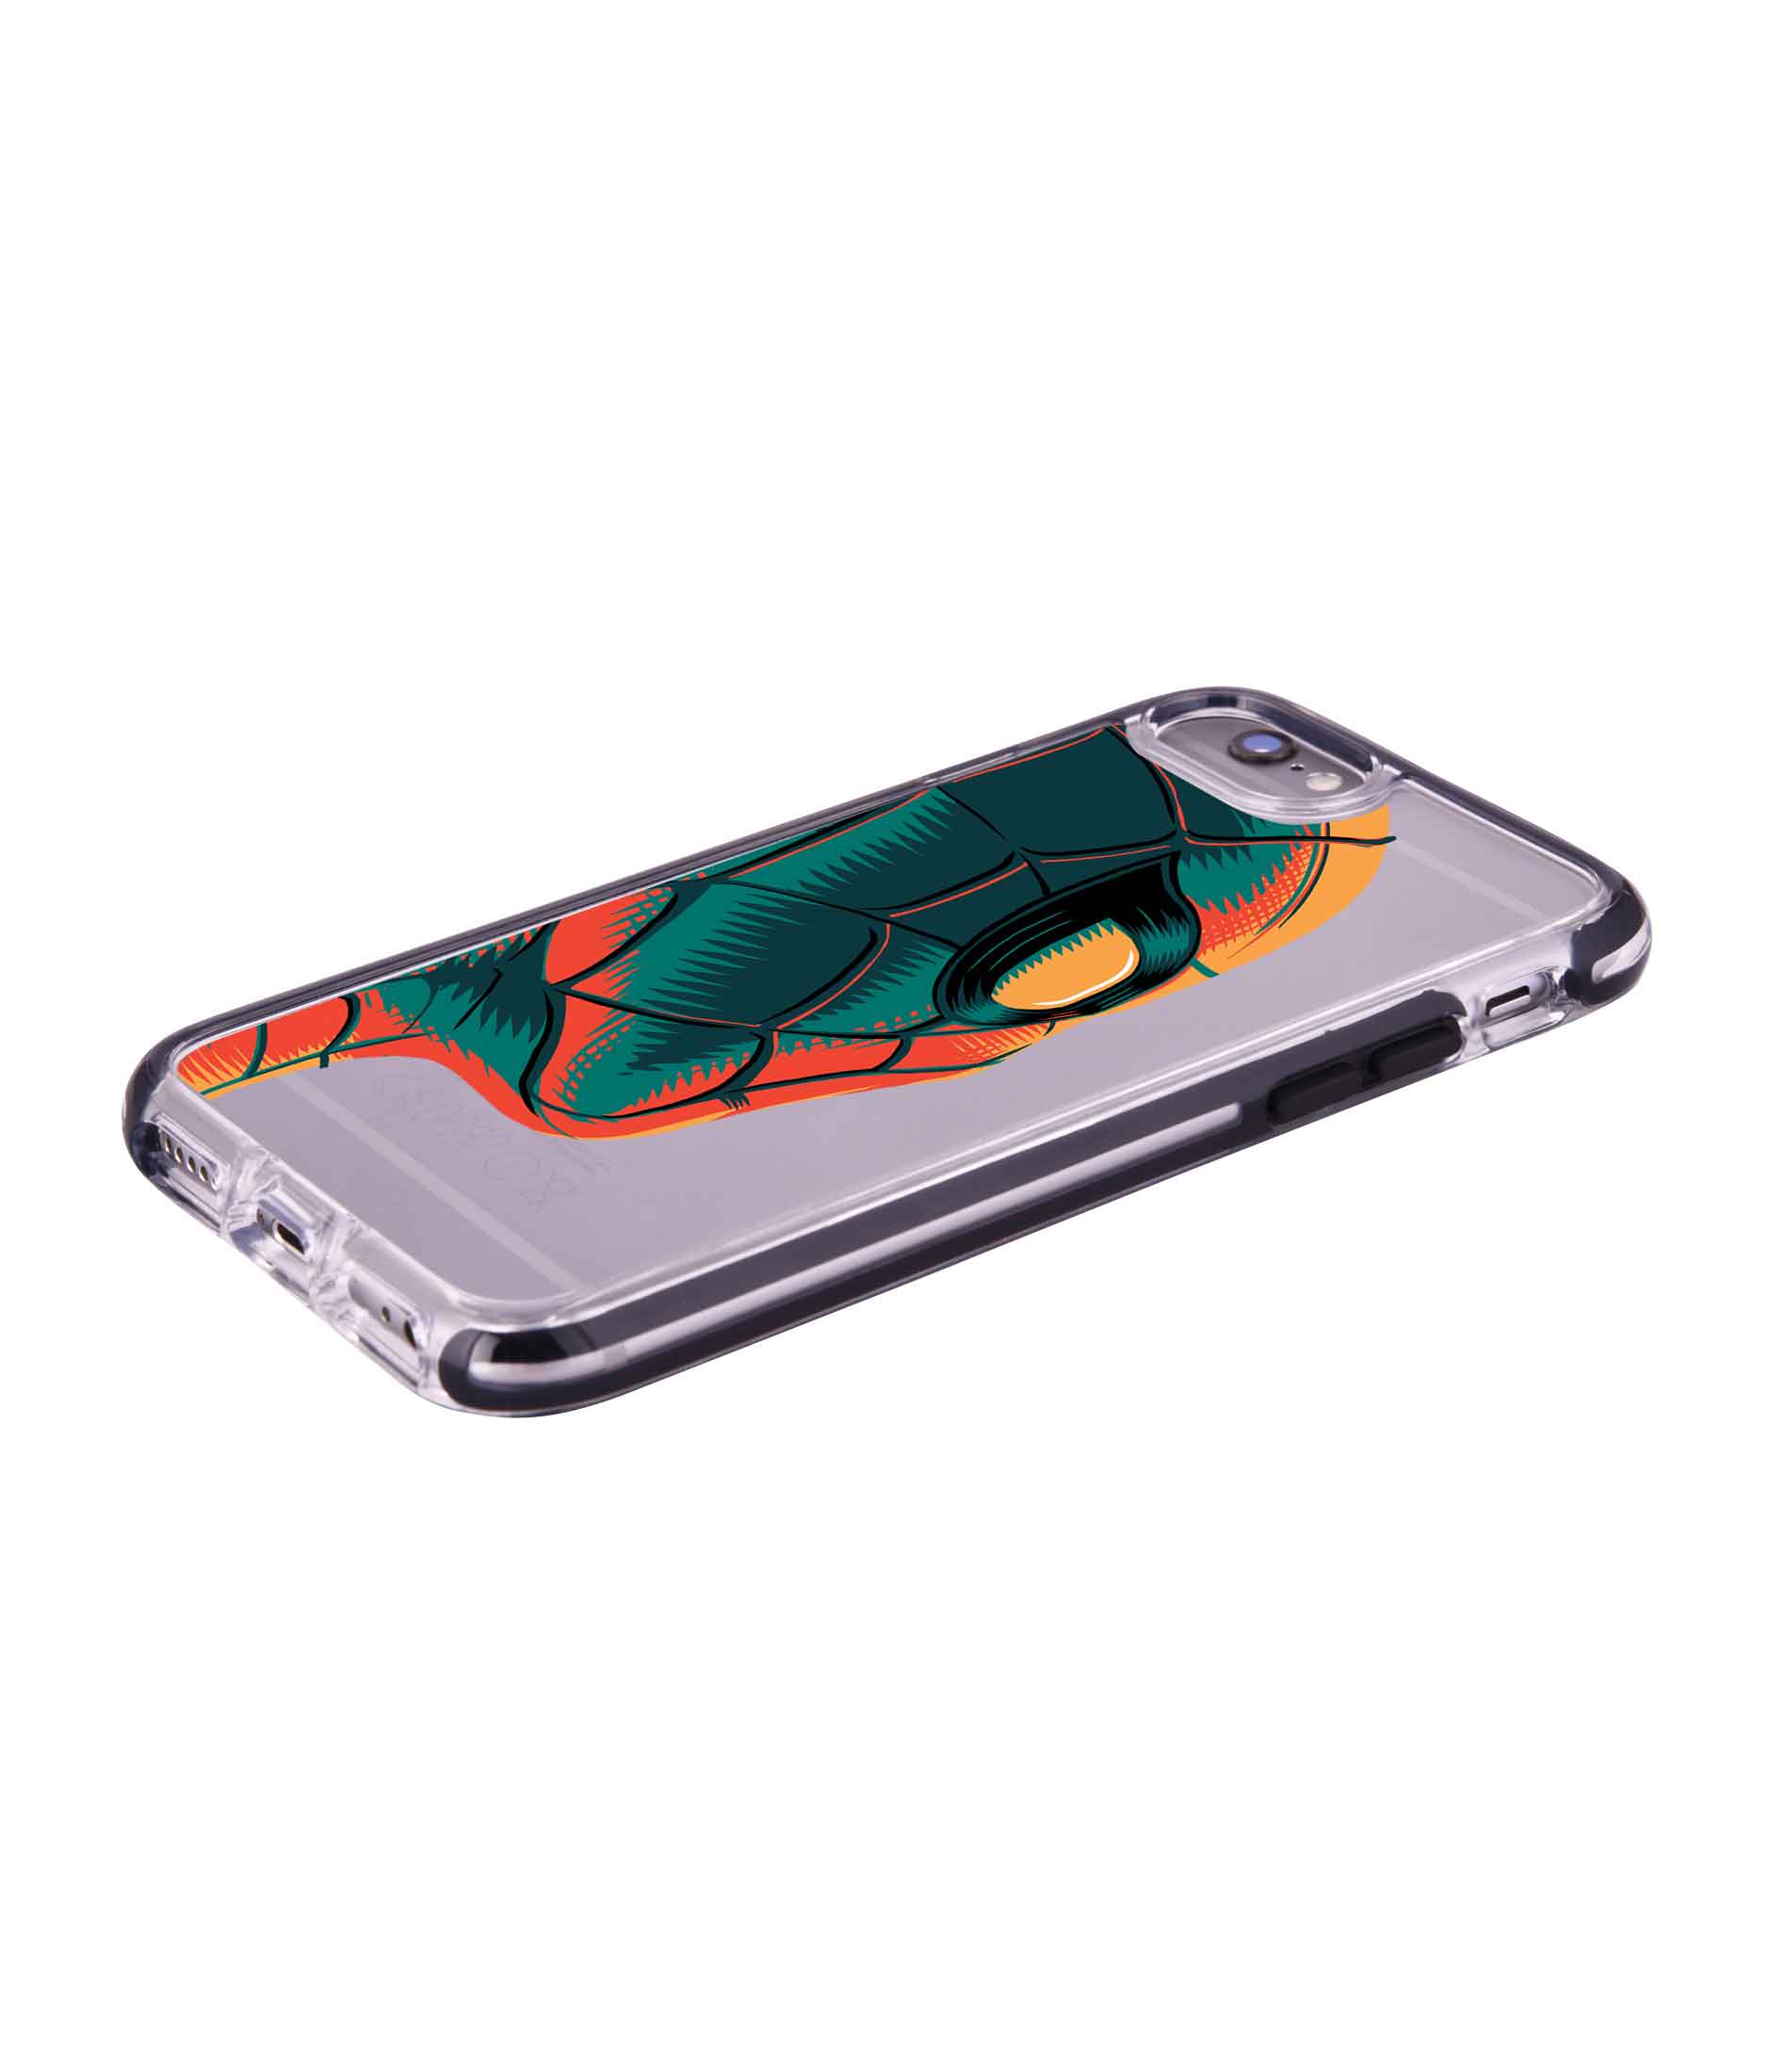 Illuminated Spiderman - Extreme Phone Case for iPhone 6